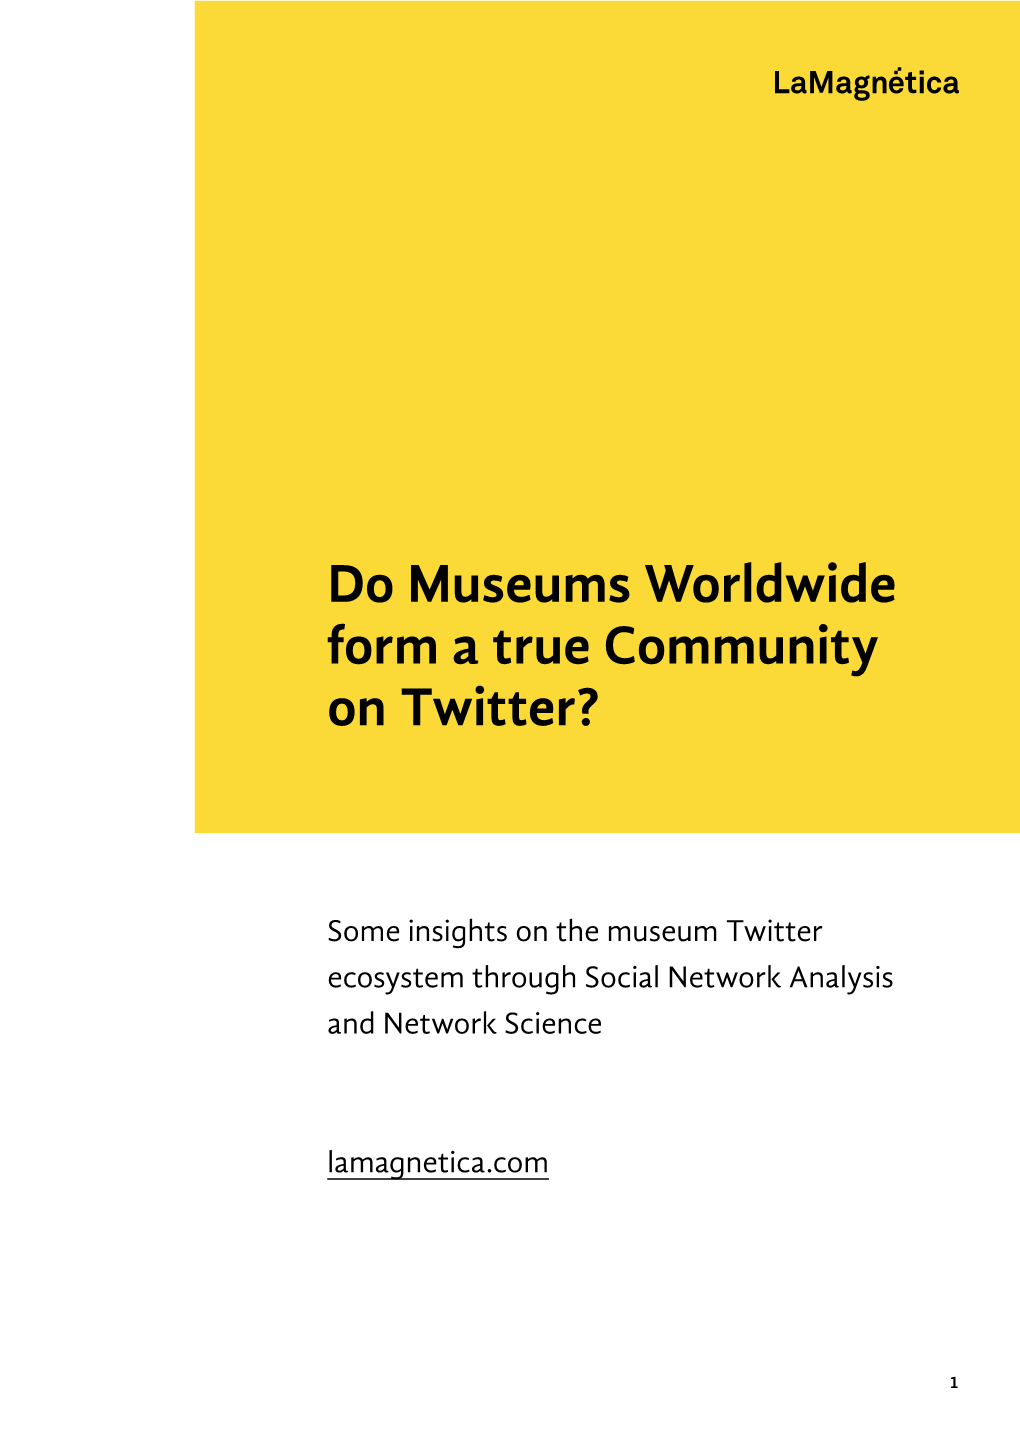 Do Museums Worldwide Form a True Community on Twitter?